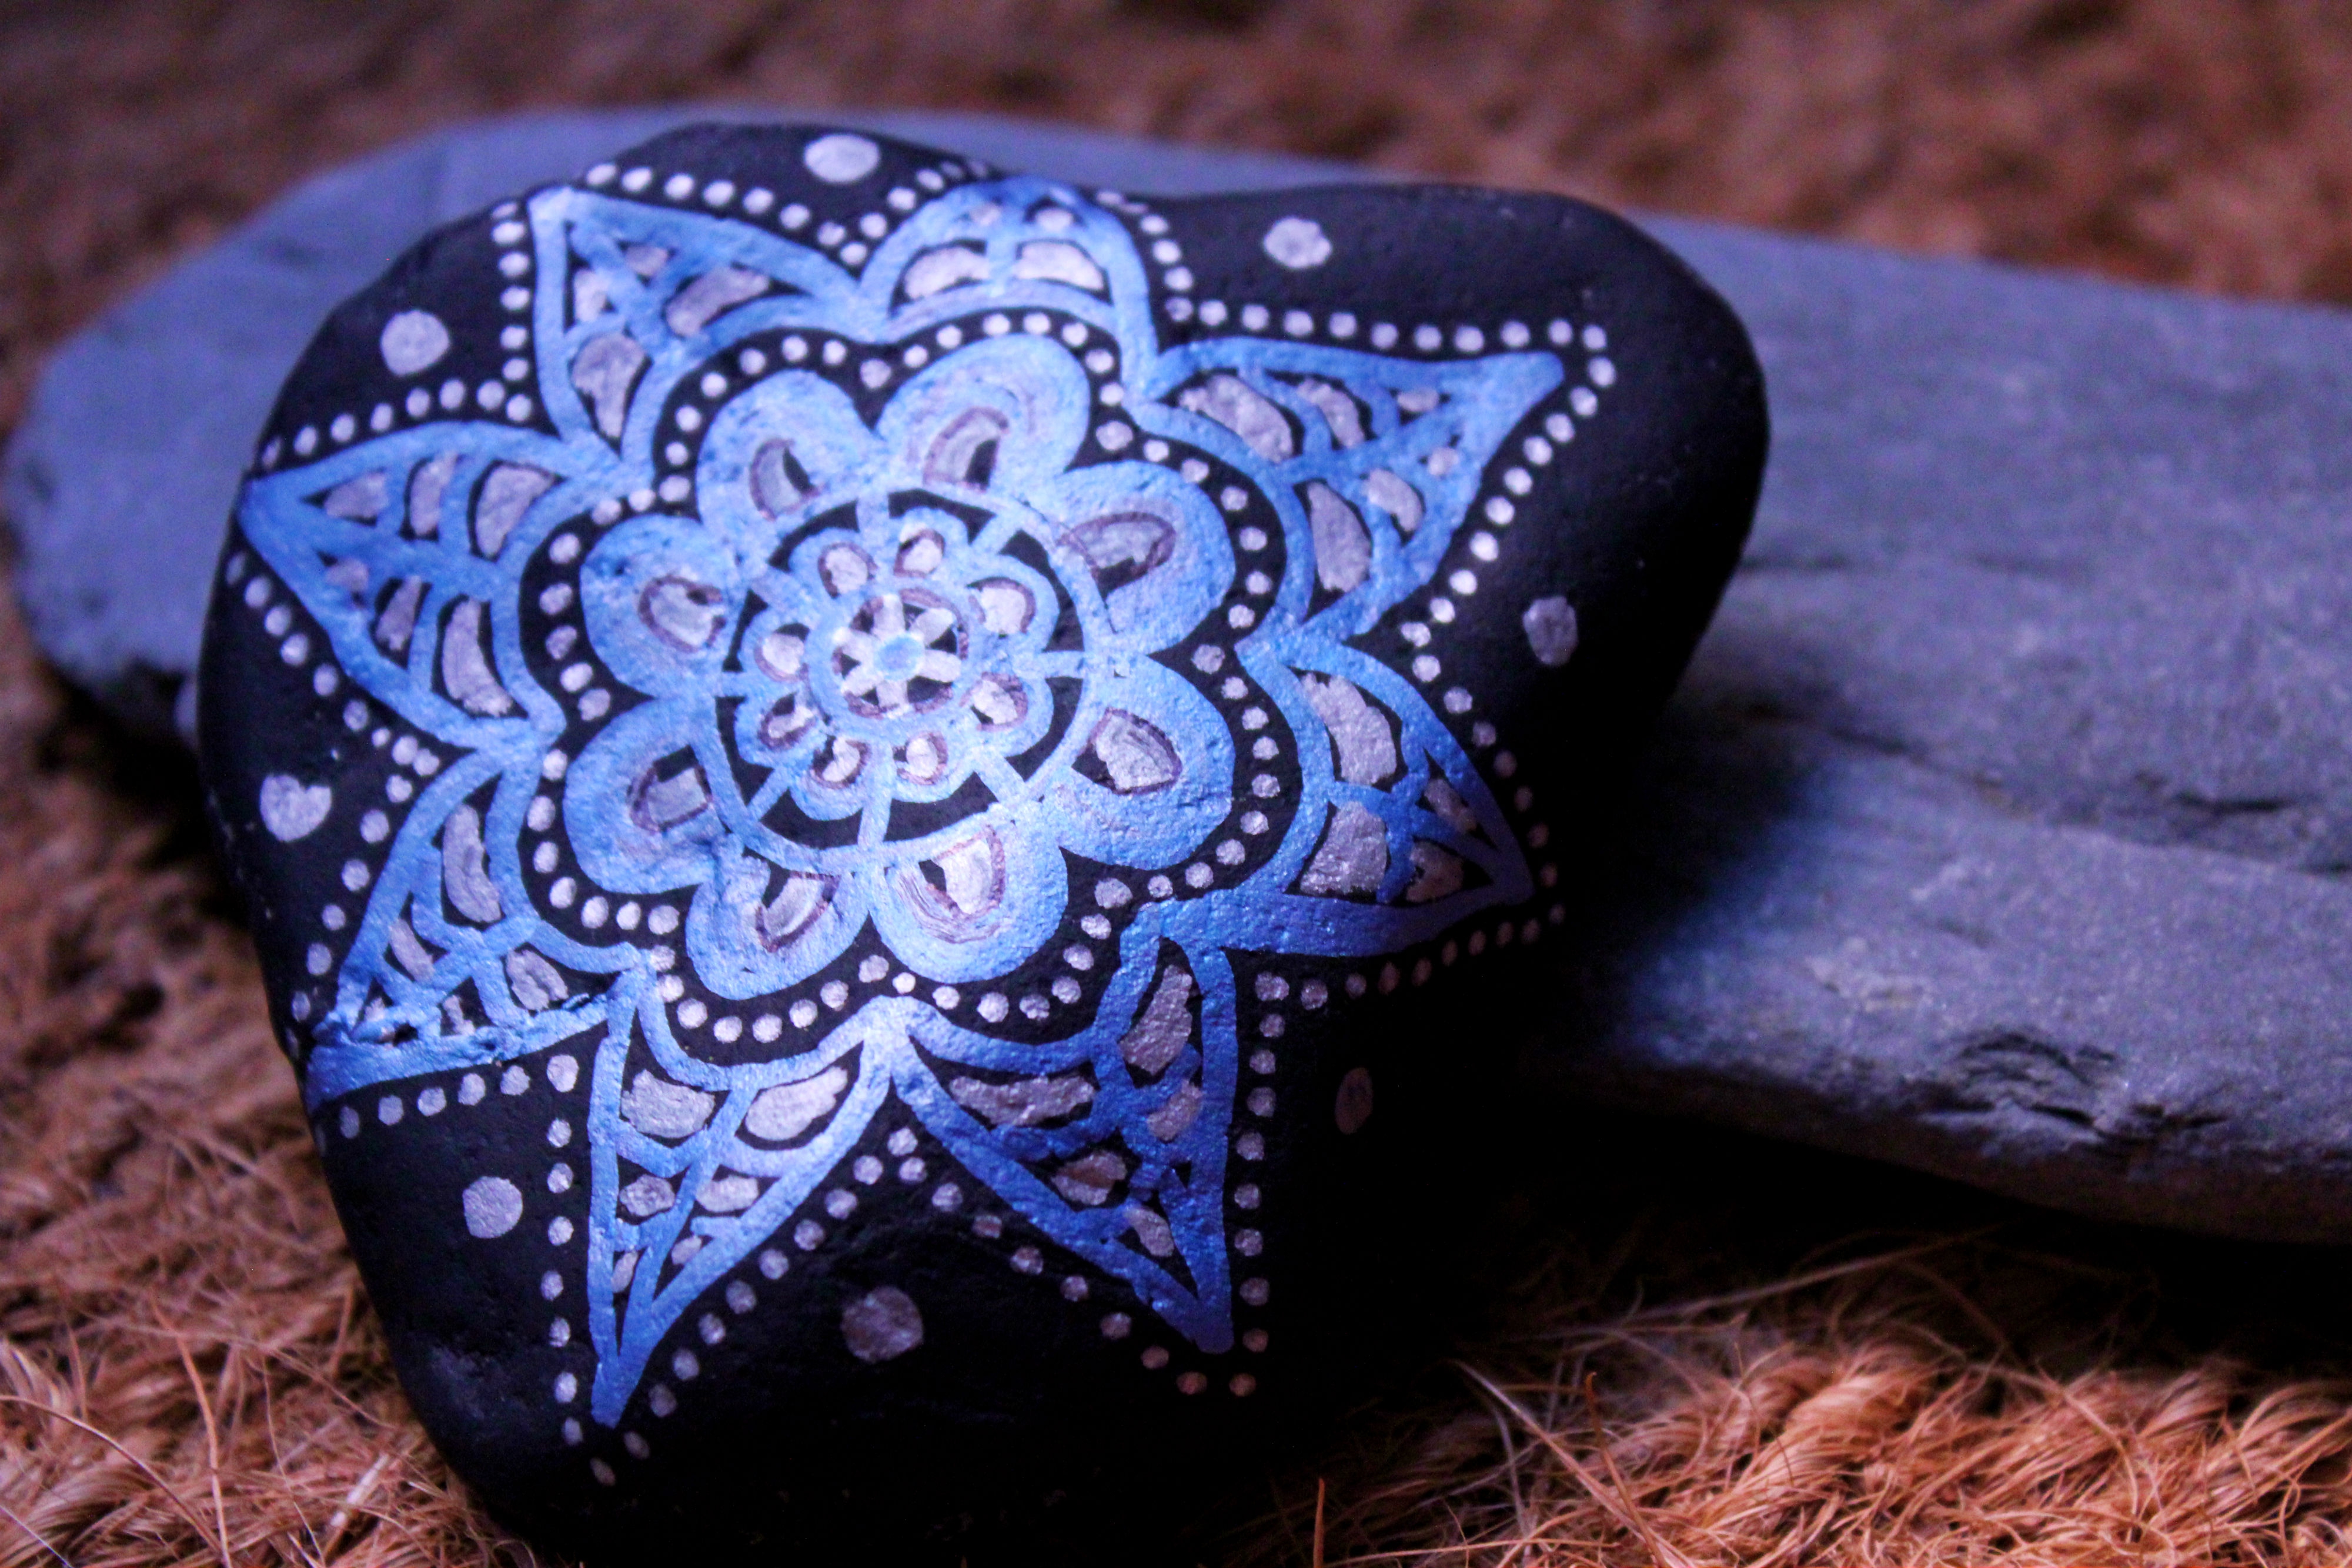 Montseny stone painted in metallic blue on black